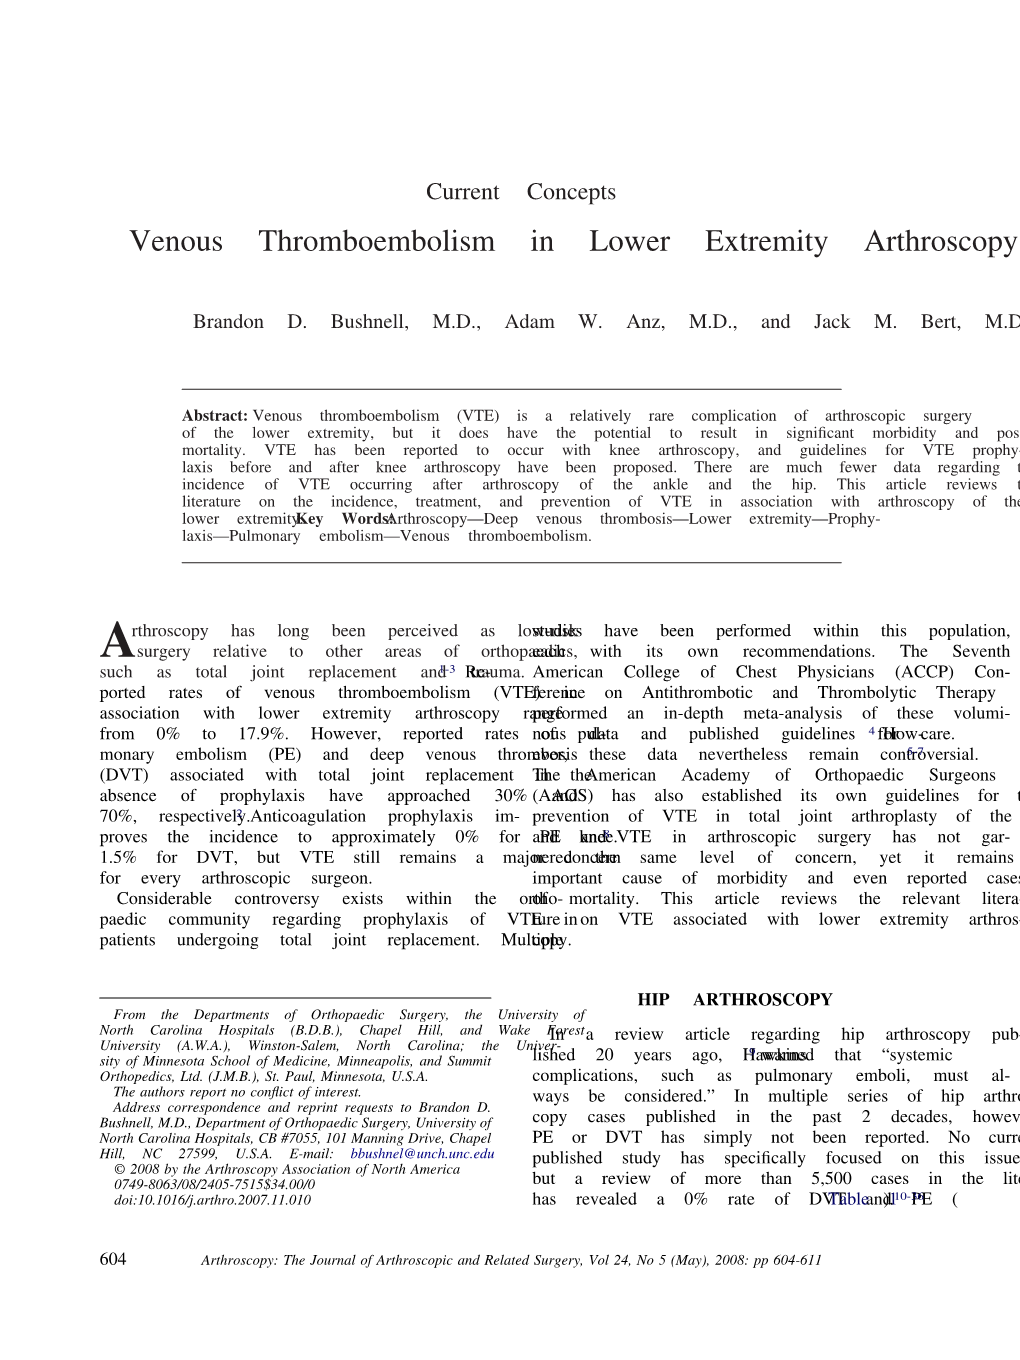 Venous Thromboembolism in Lower Extremity Arthroscopy